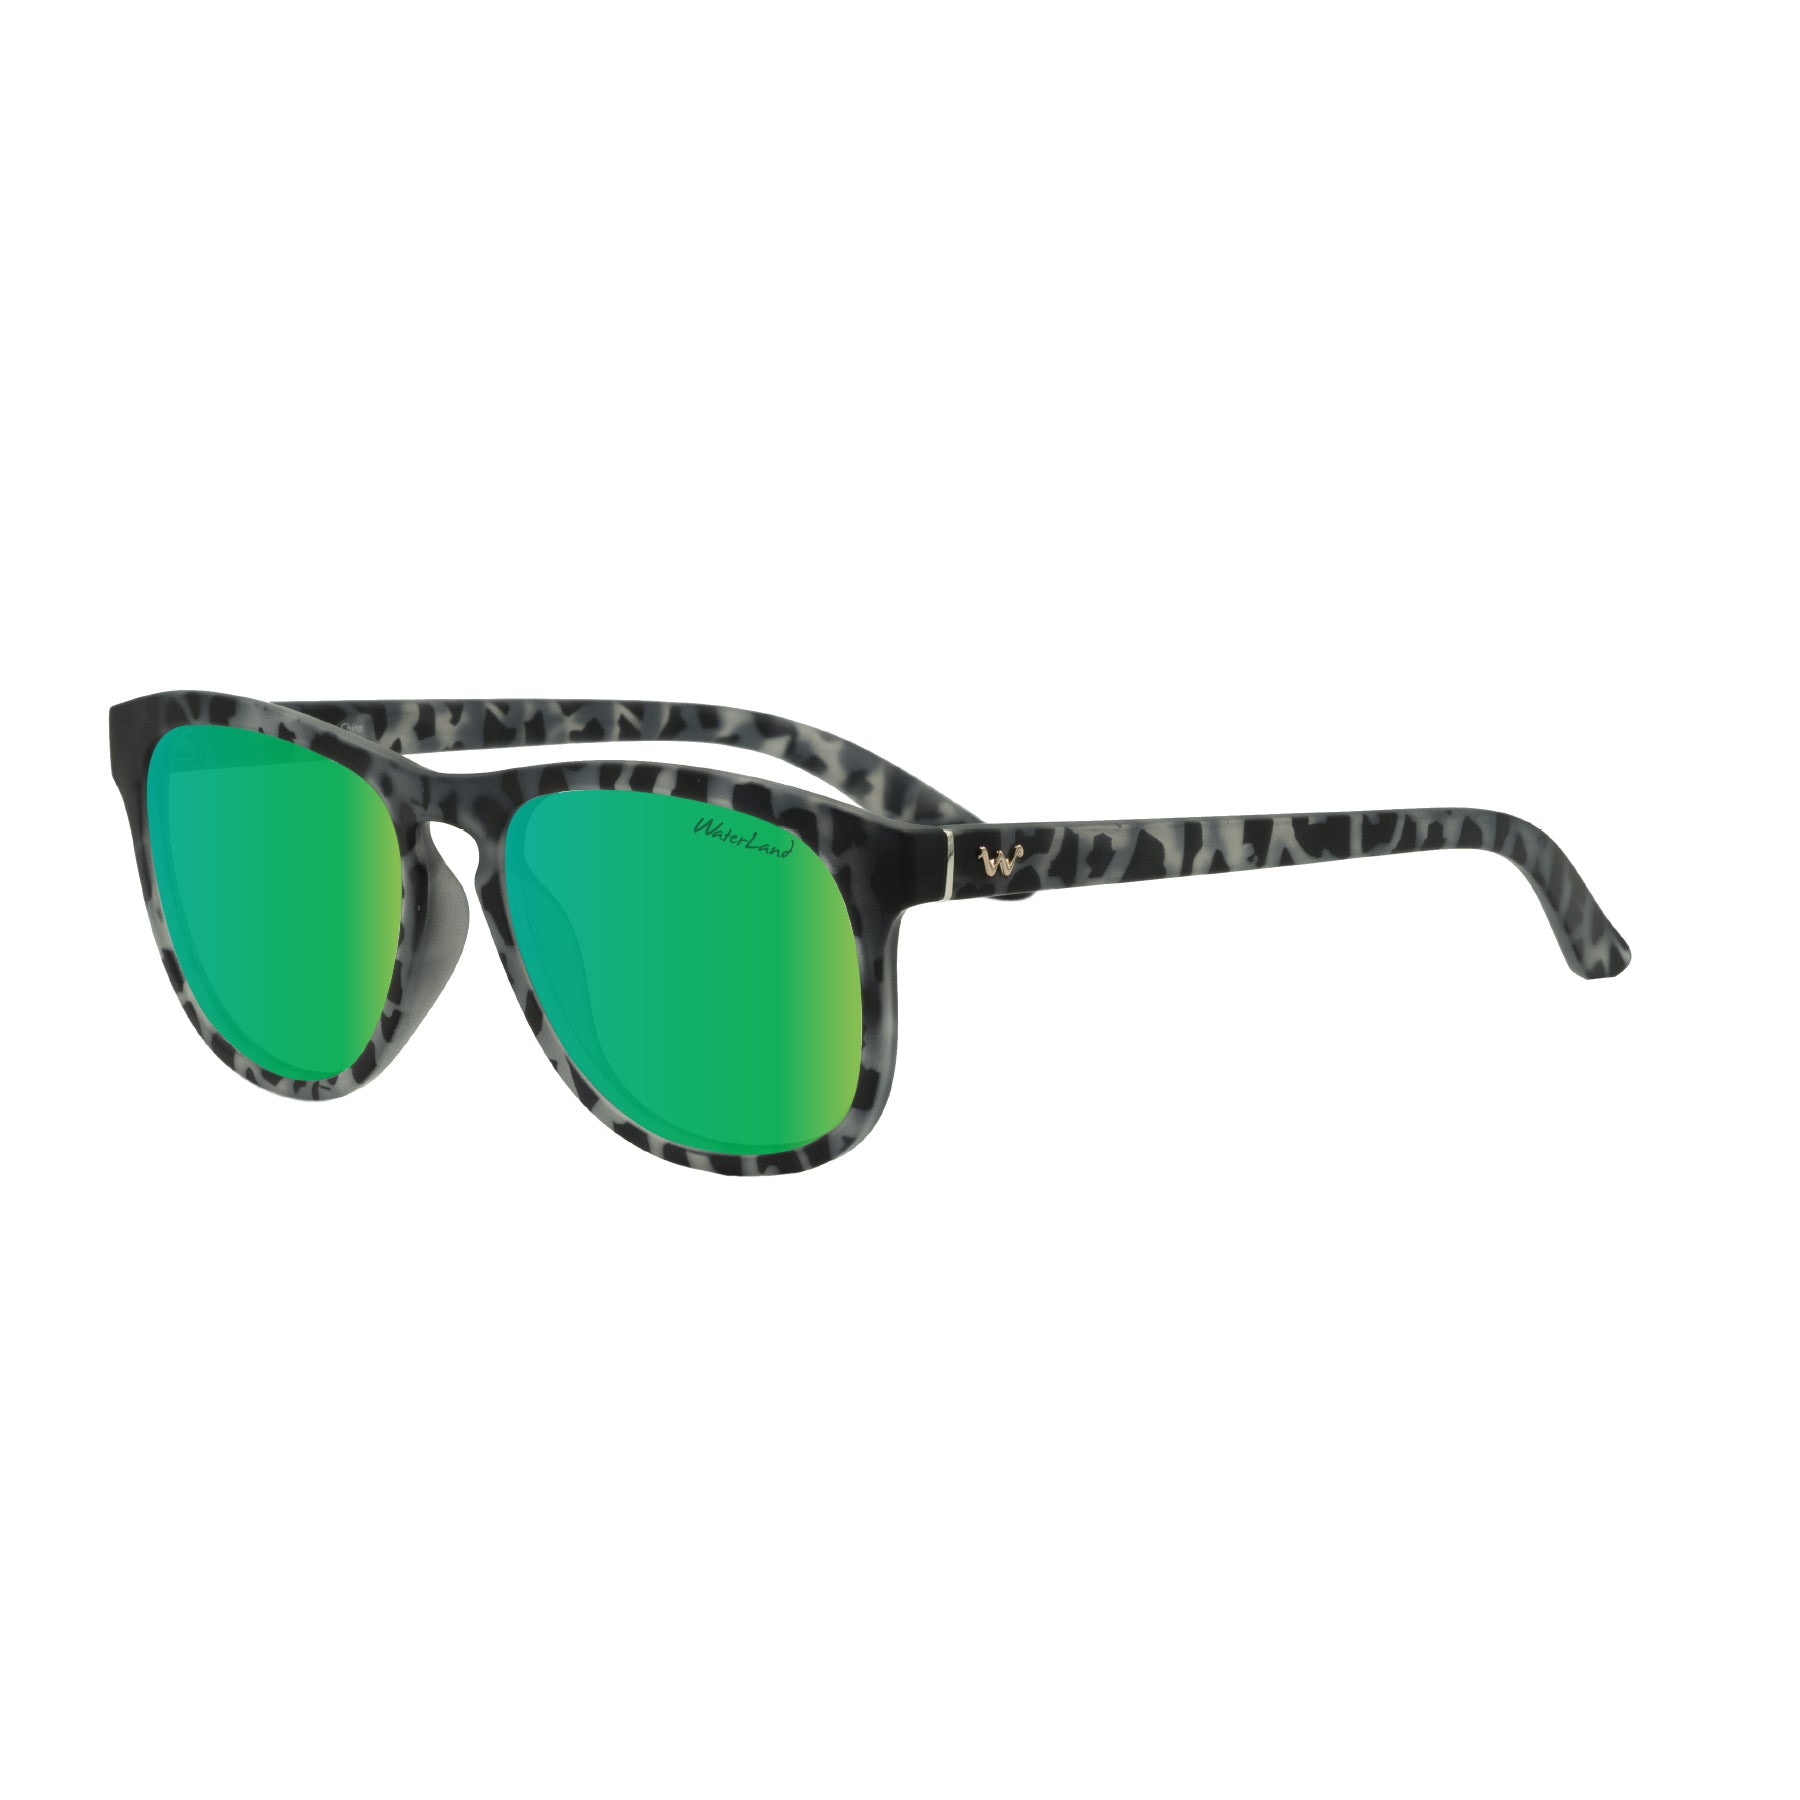 Waterland Polarized Sunglasses - Ladi Series - Black Tortoise